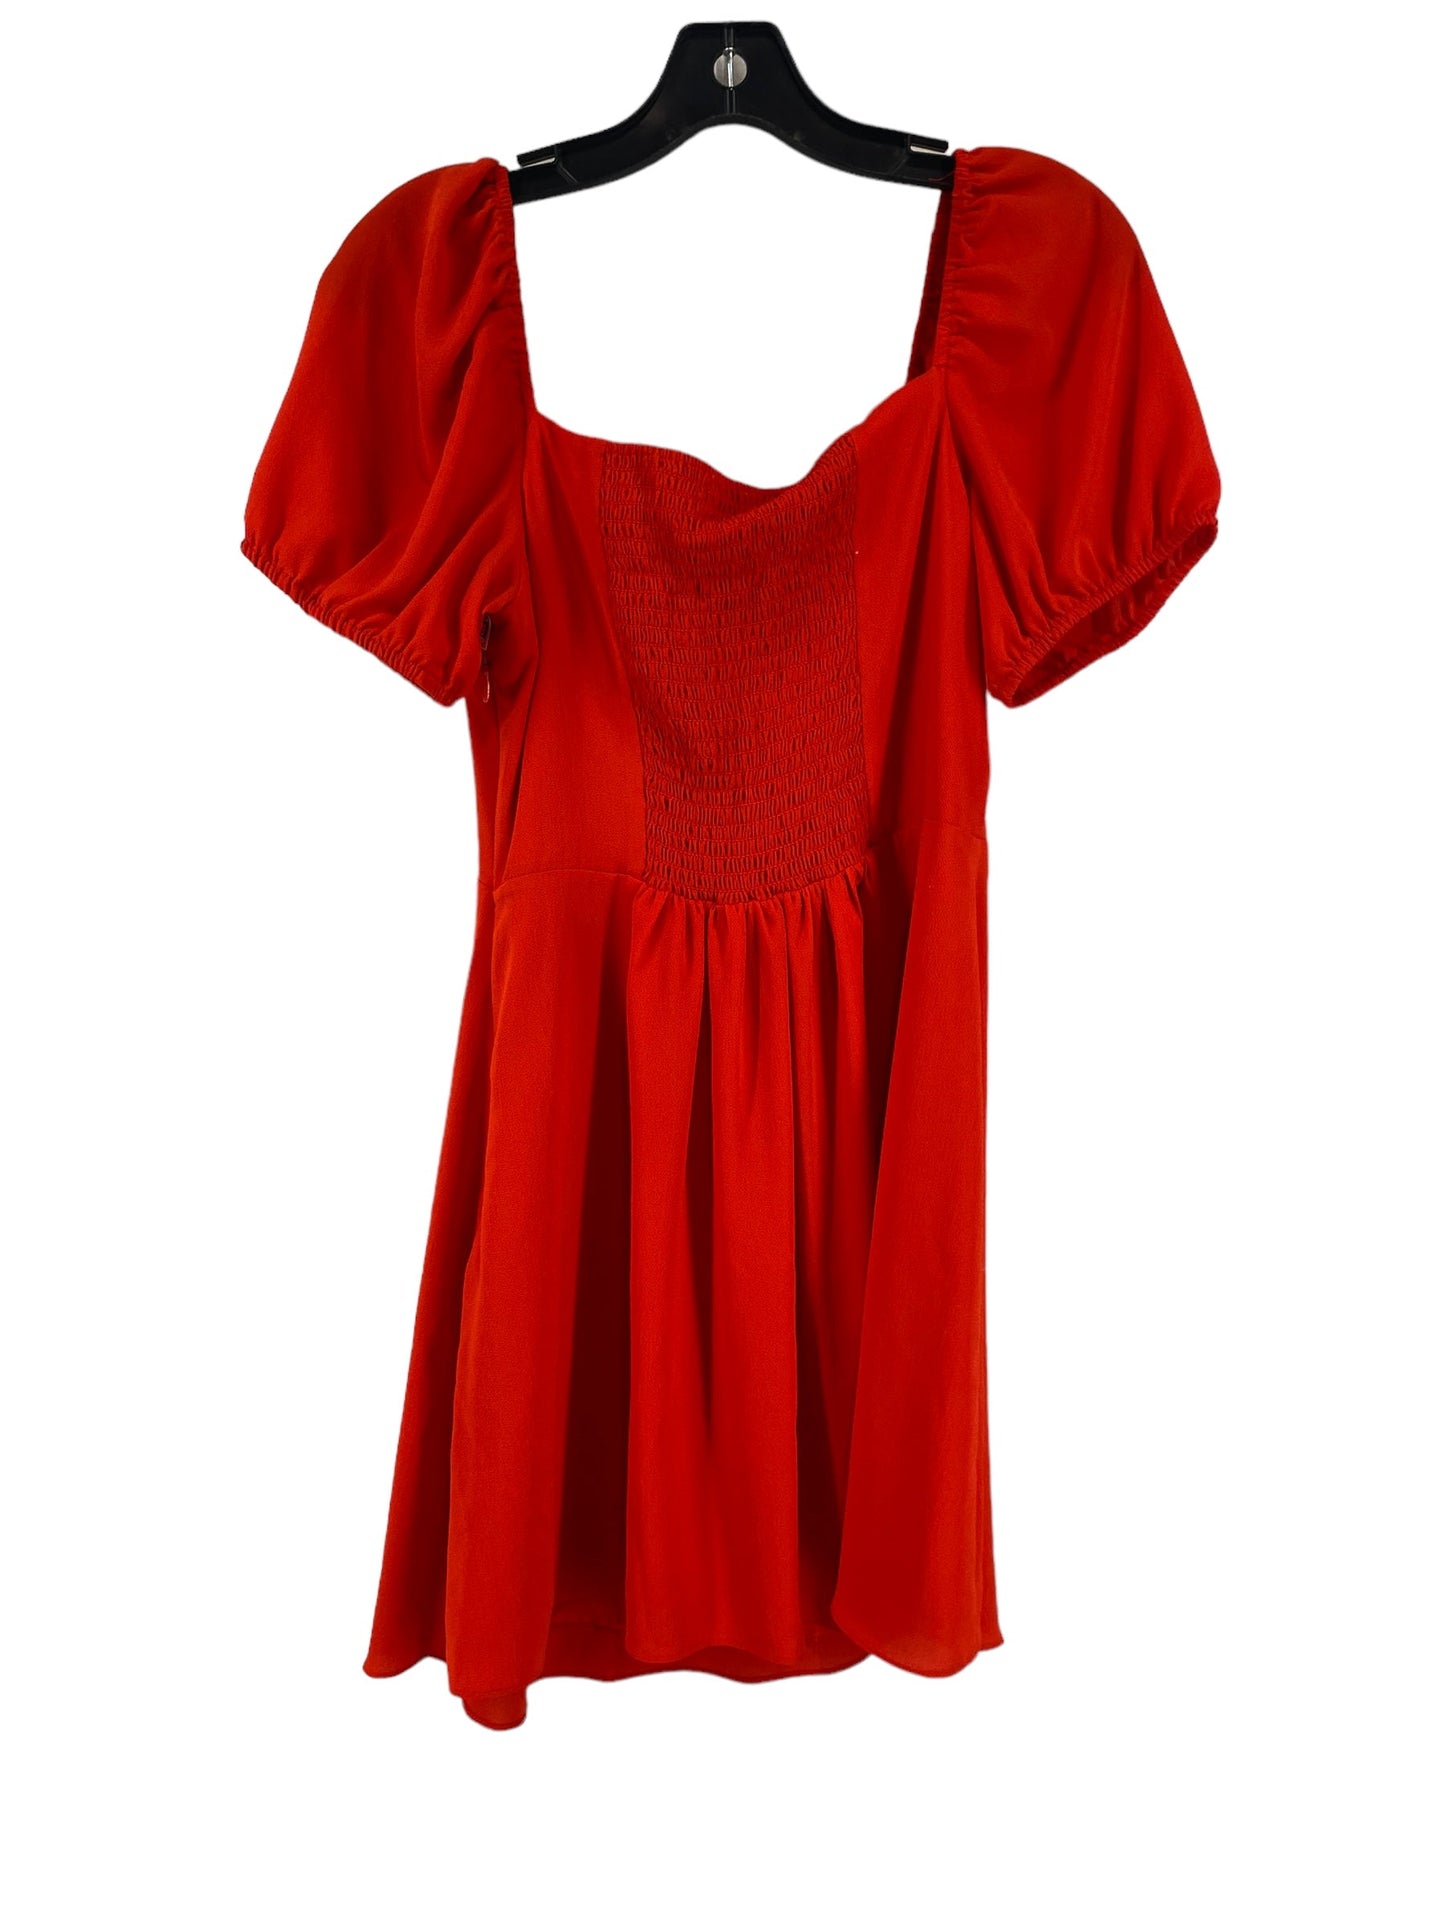 Dress Casual Short By Gianni Bini  Size: 8